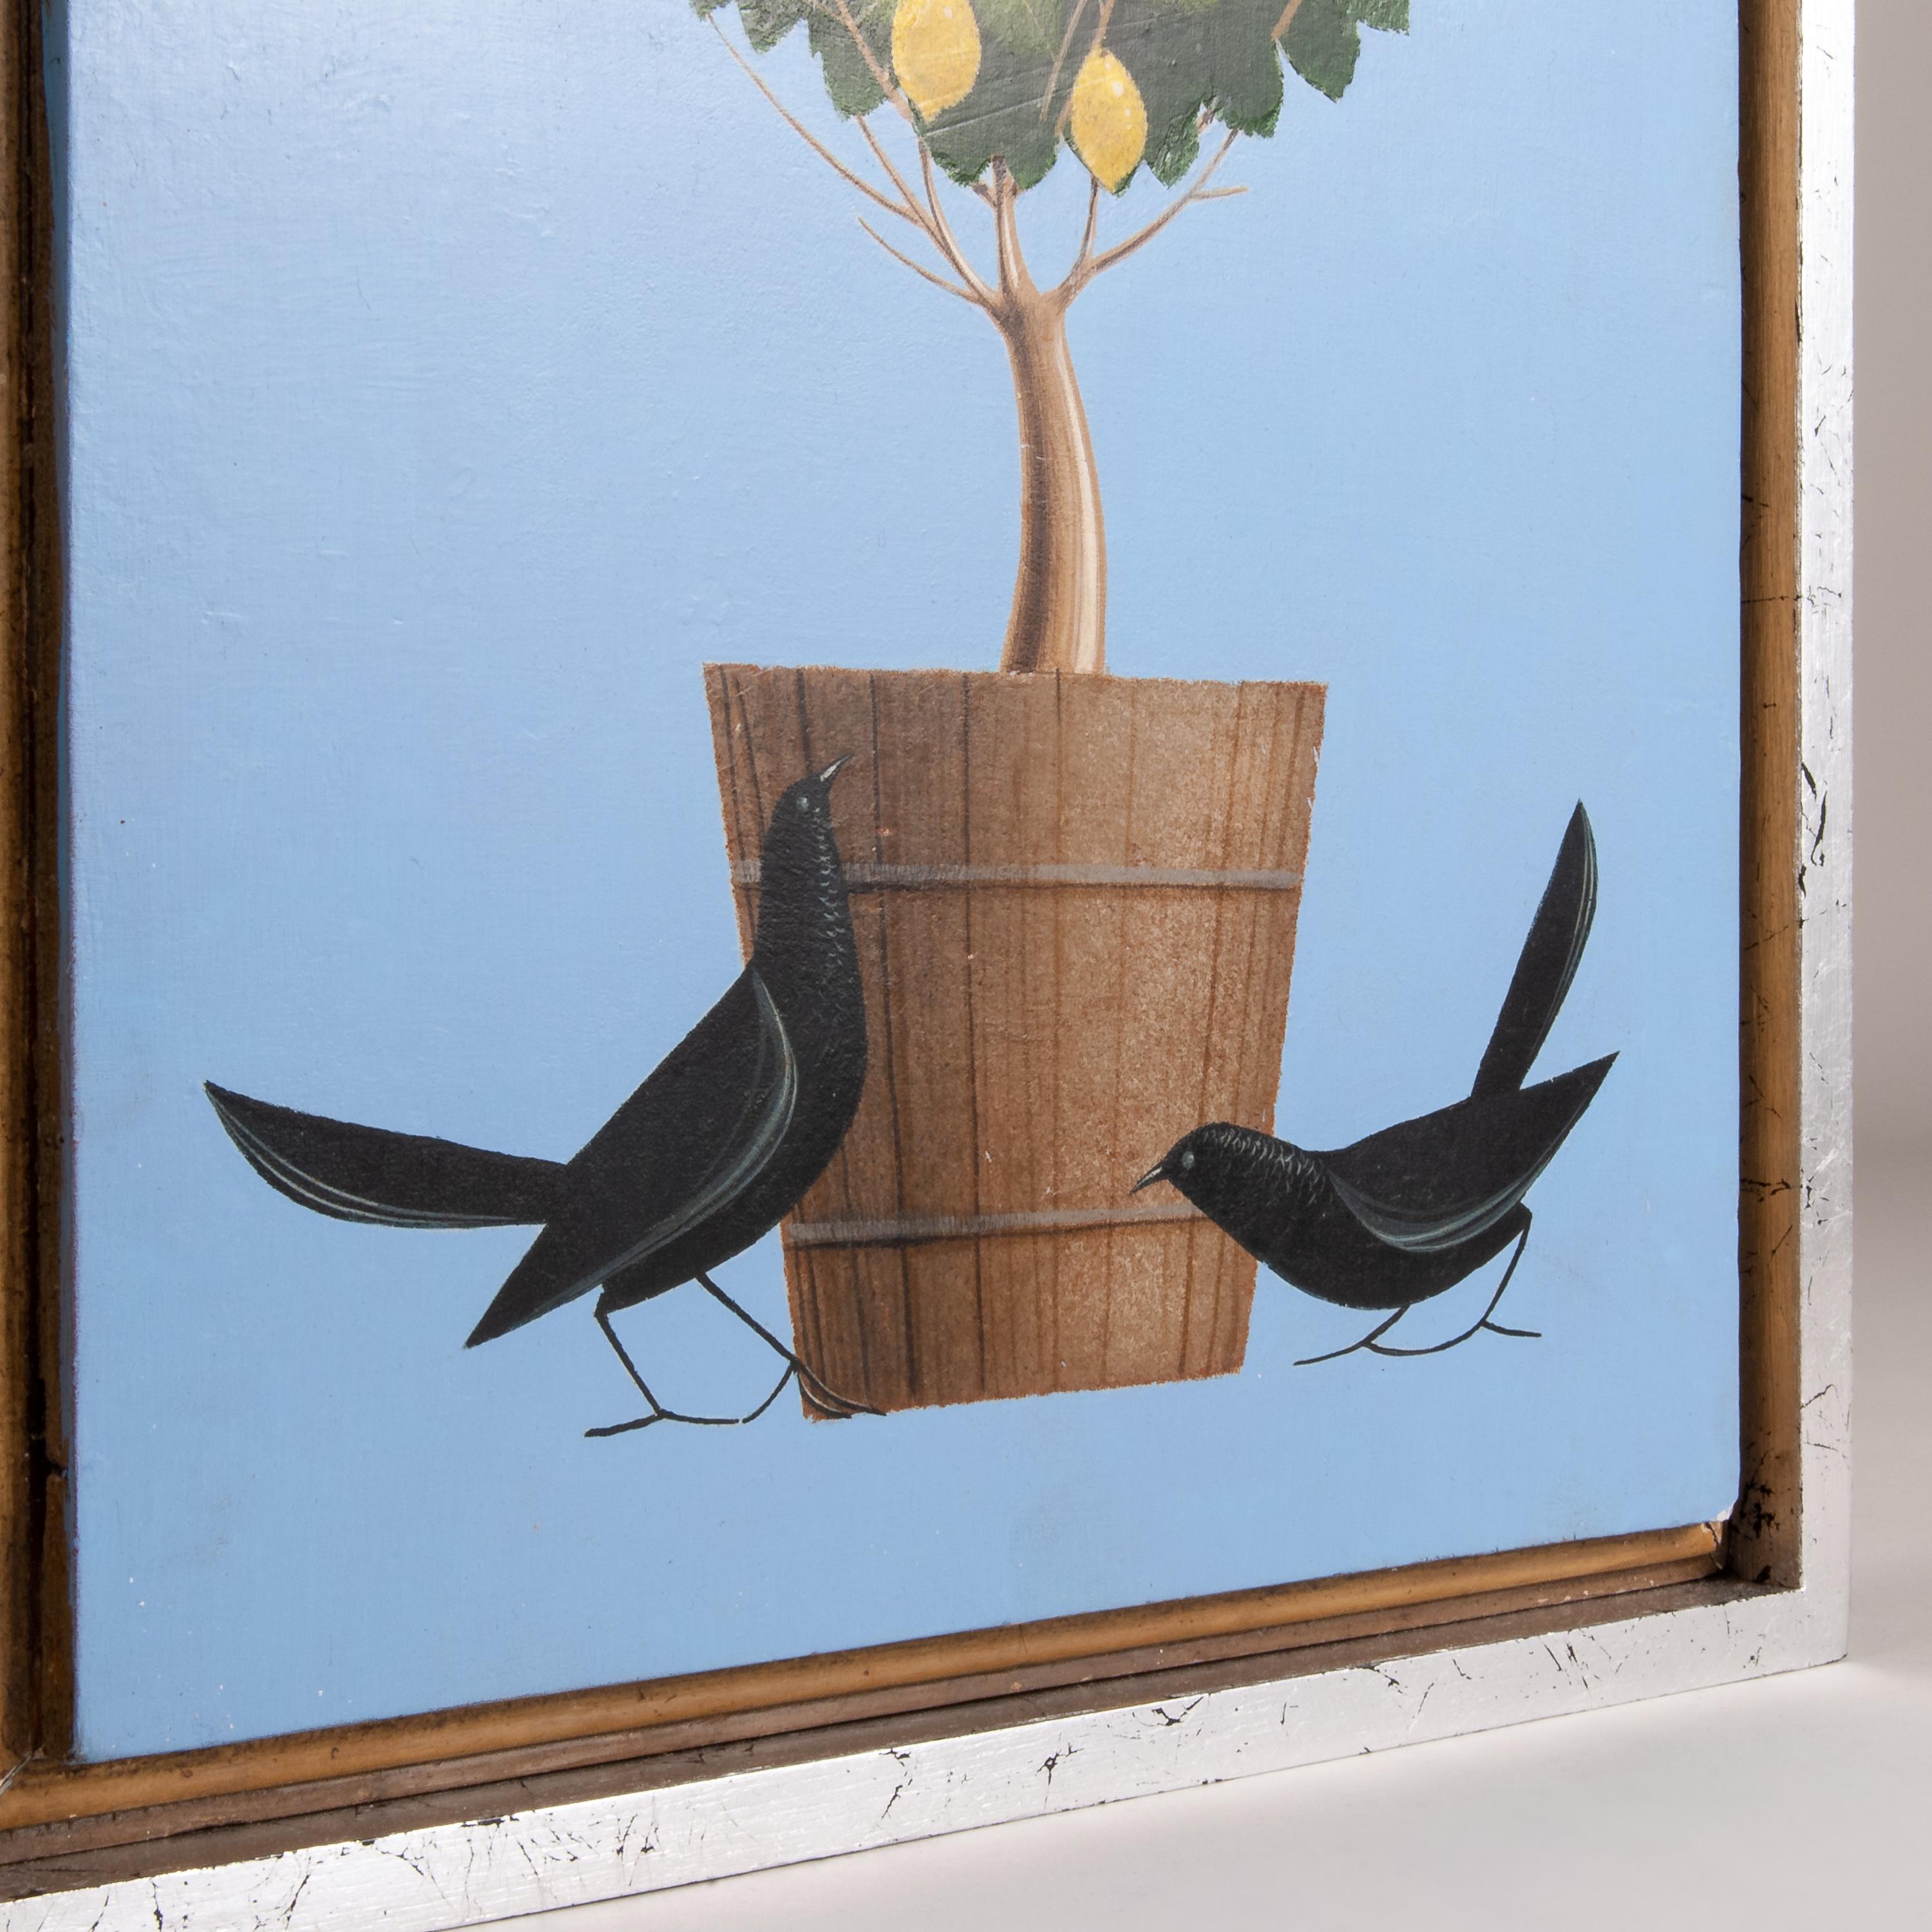 Folk Art Original Acrylic on Wood Painting of Birds & Pot with Tree by A Rangel Hidalgo For Sale